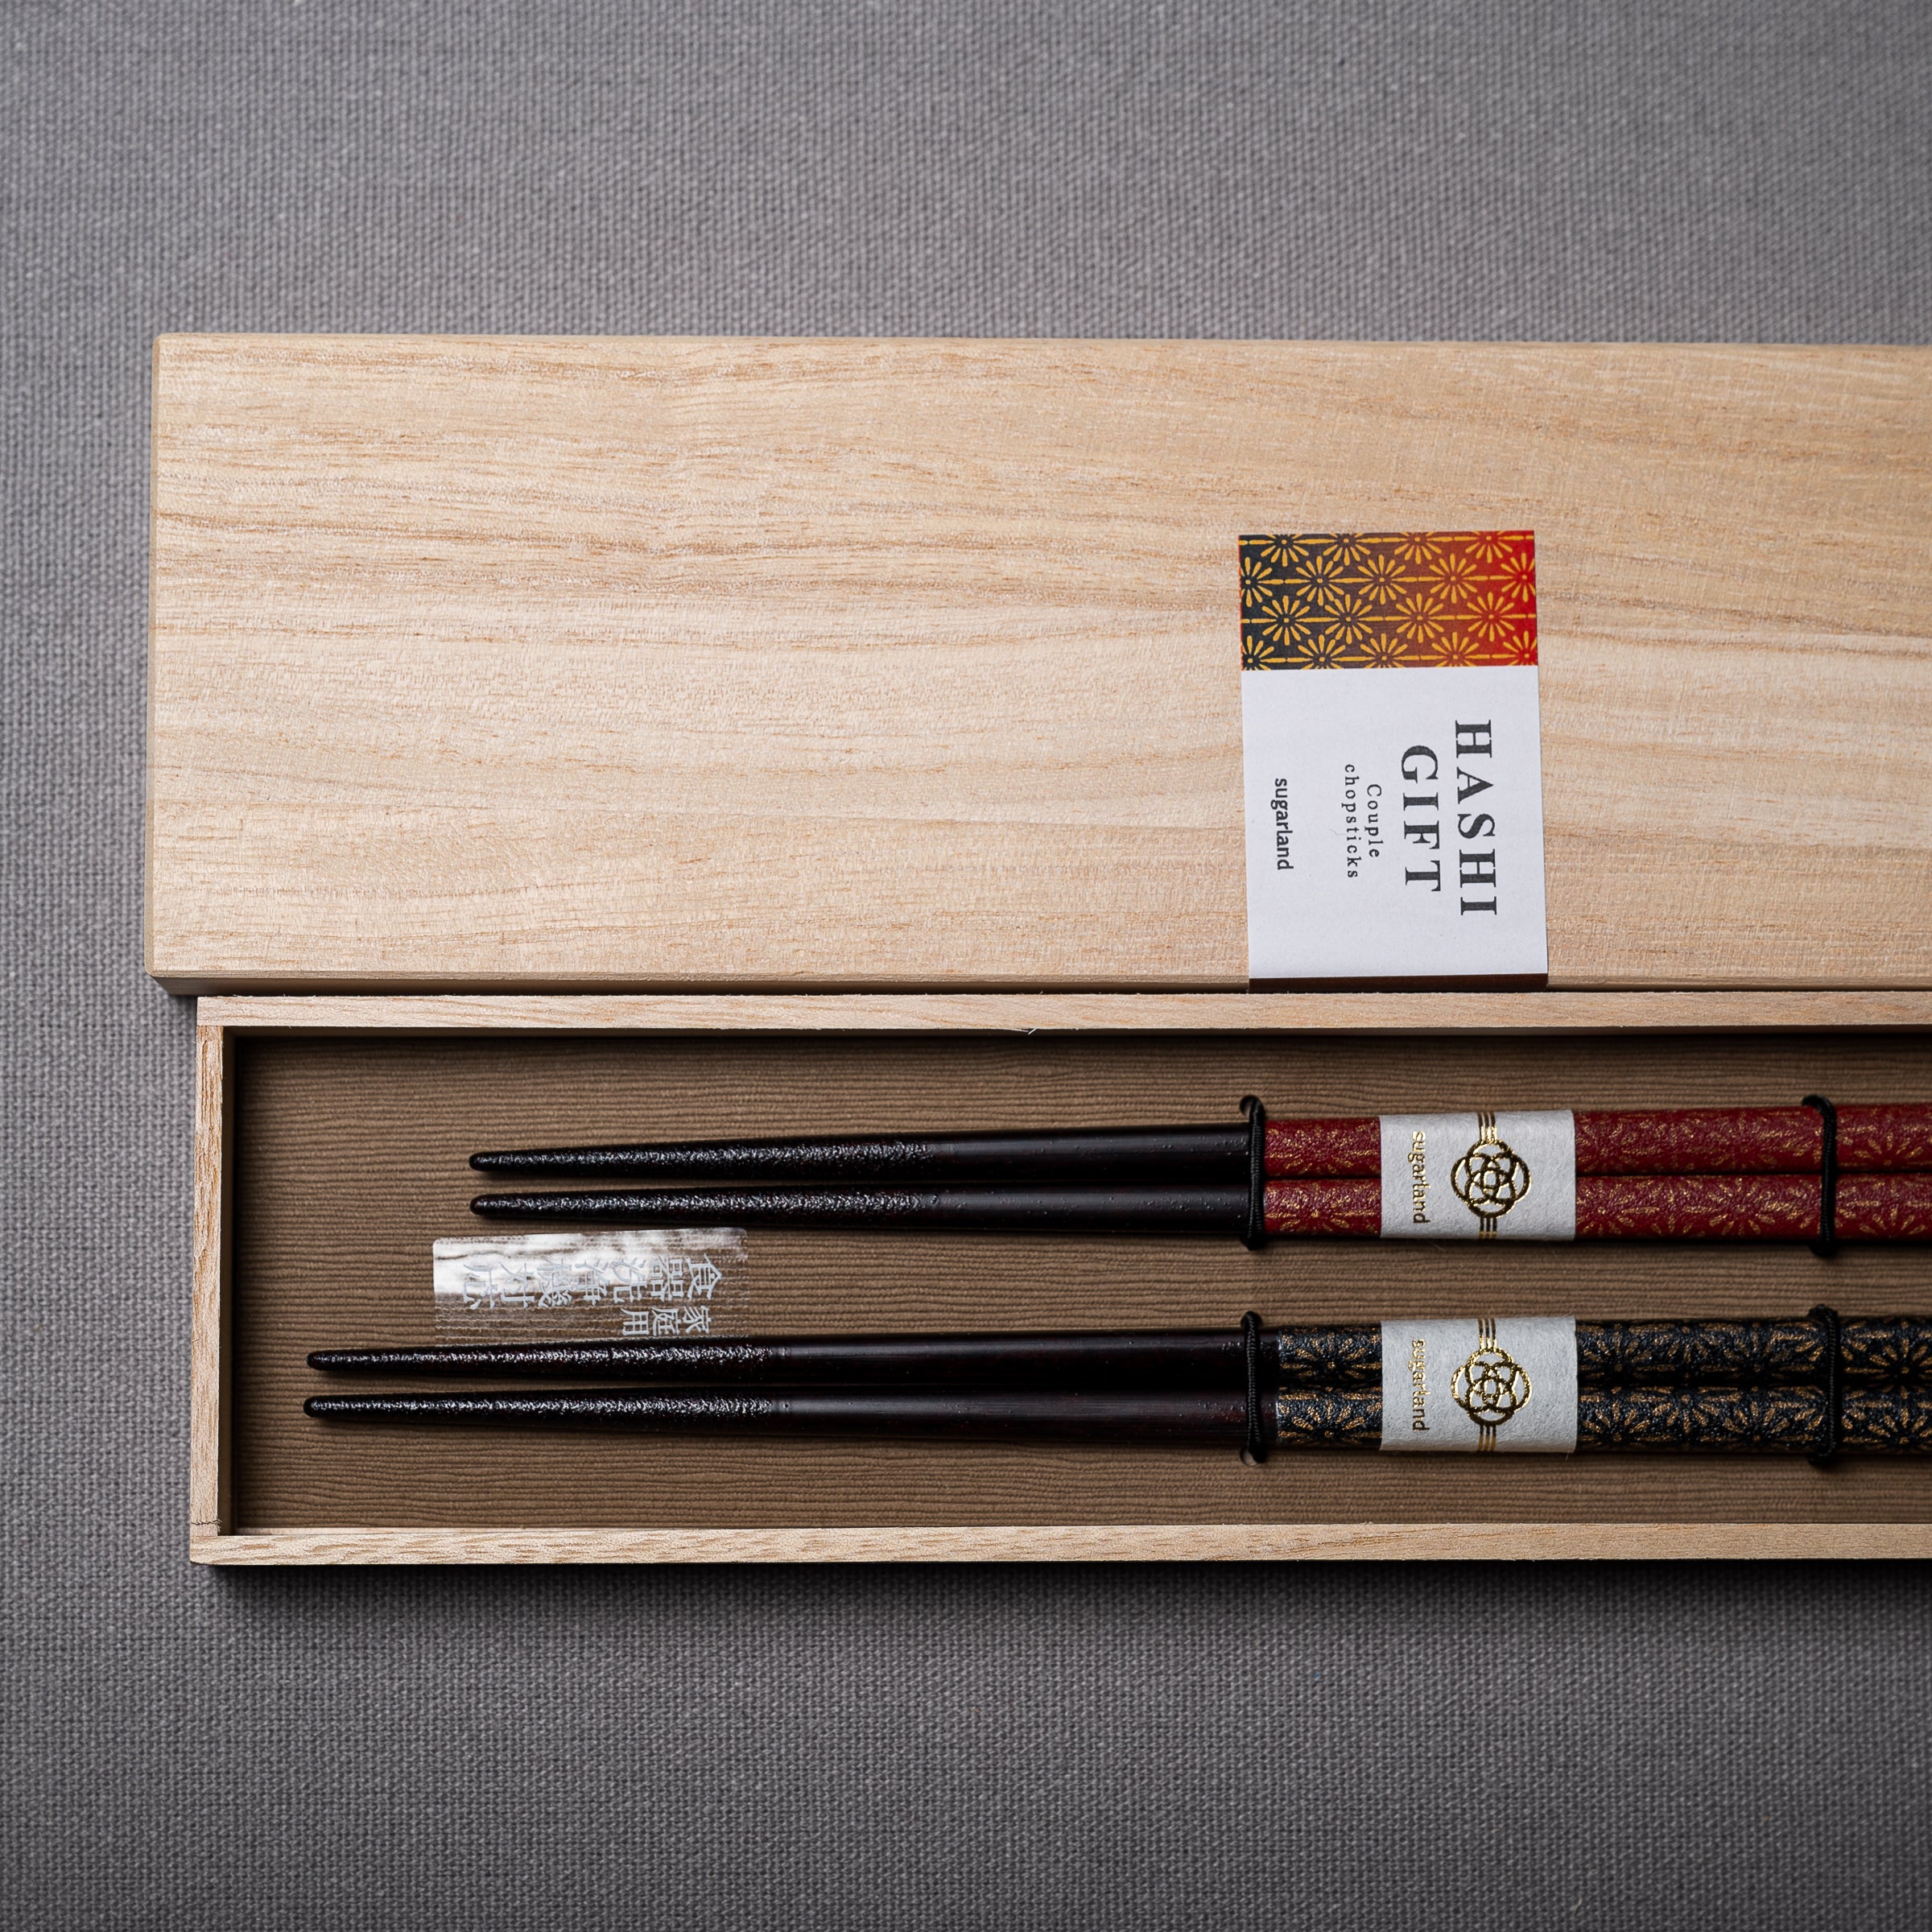 Komon Chopstick Gift Set / 小紋 夫婦箸ギフトセット